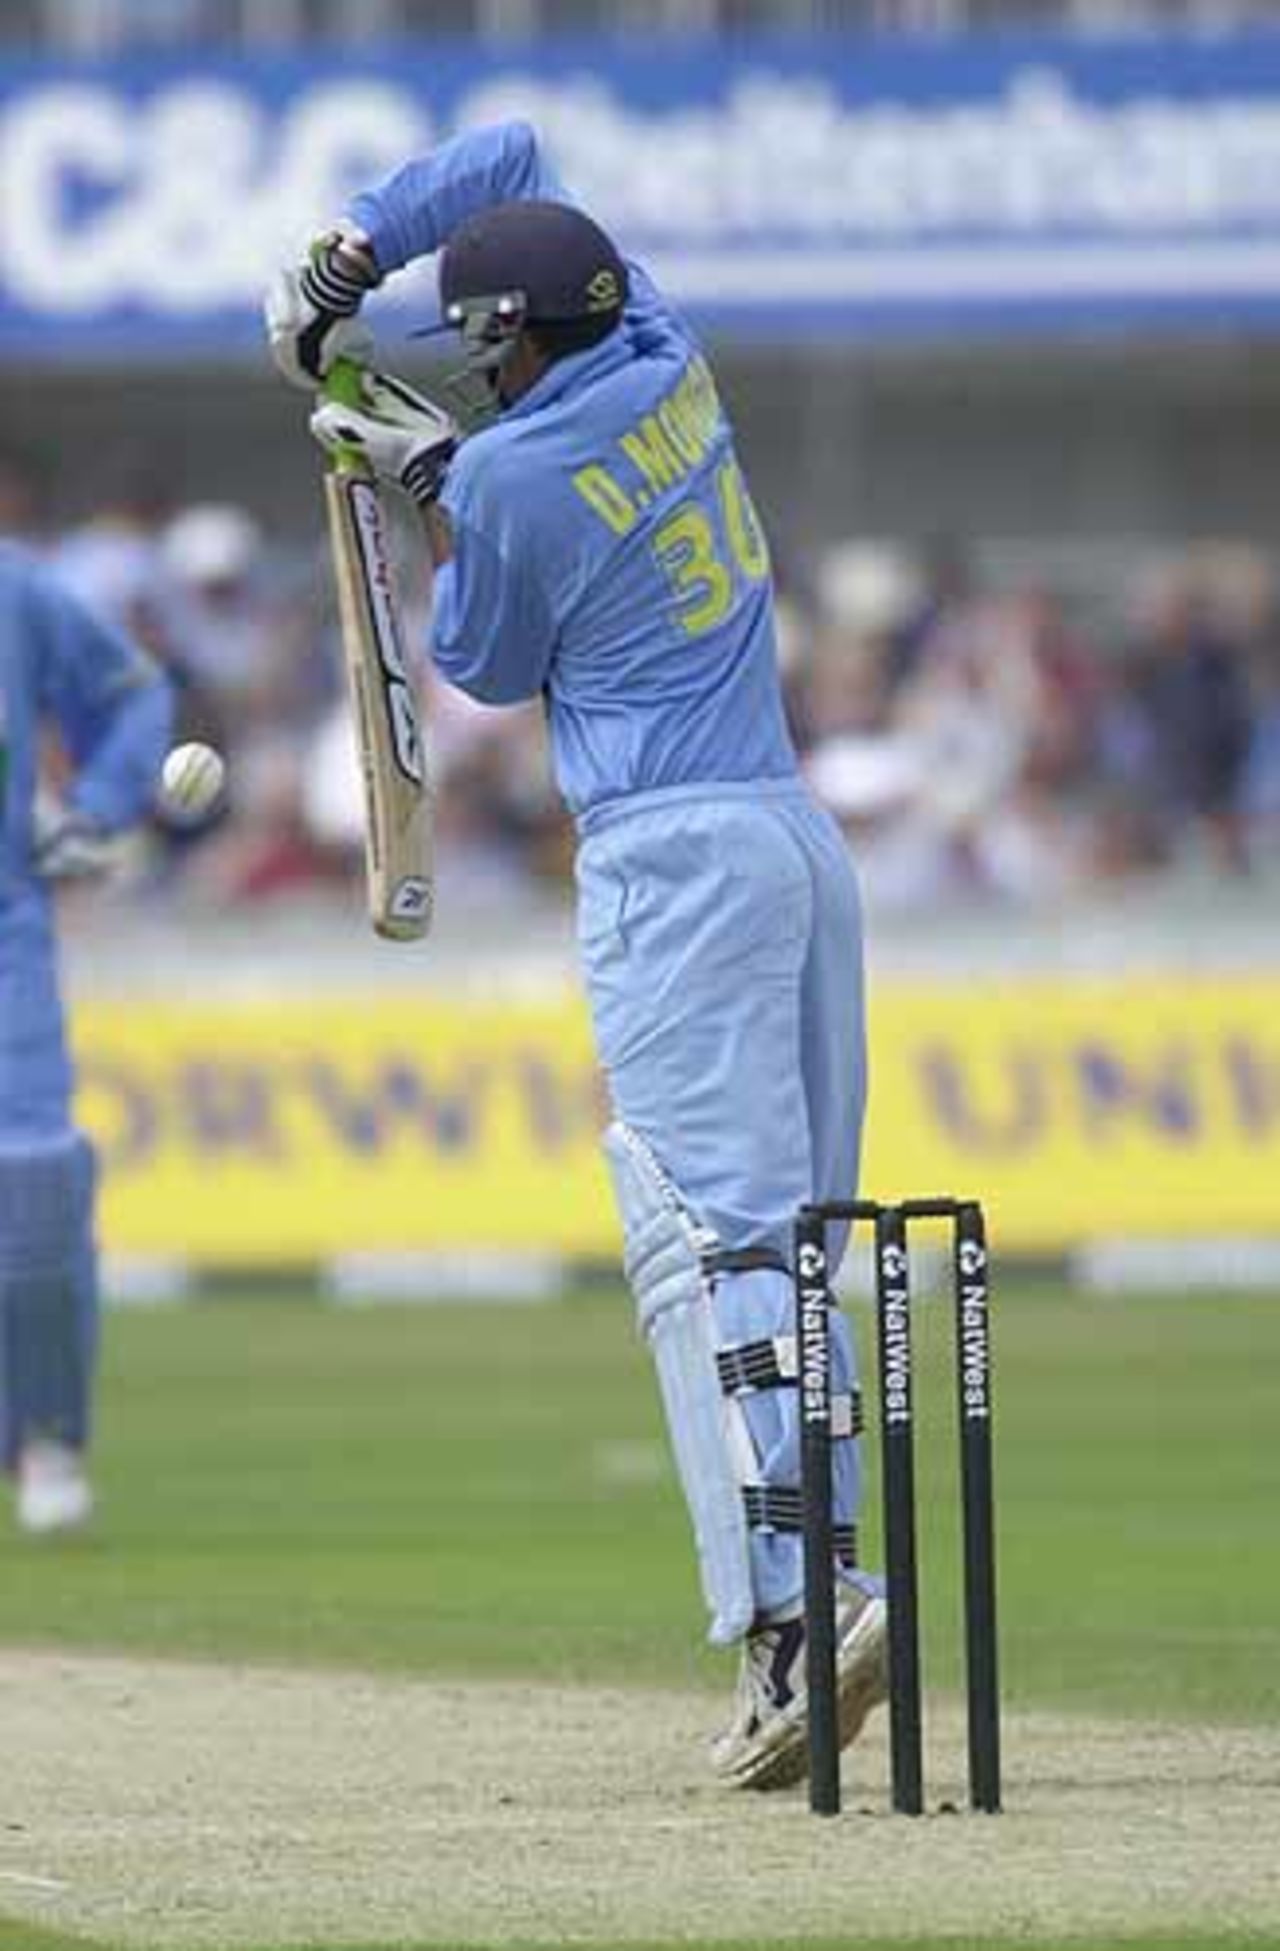 Mongia plays down a Zoysa effort, India v Sri Lanka, NatWest Series, The Oval, 30 Jun 2002